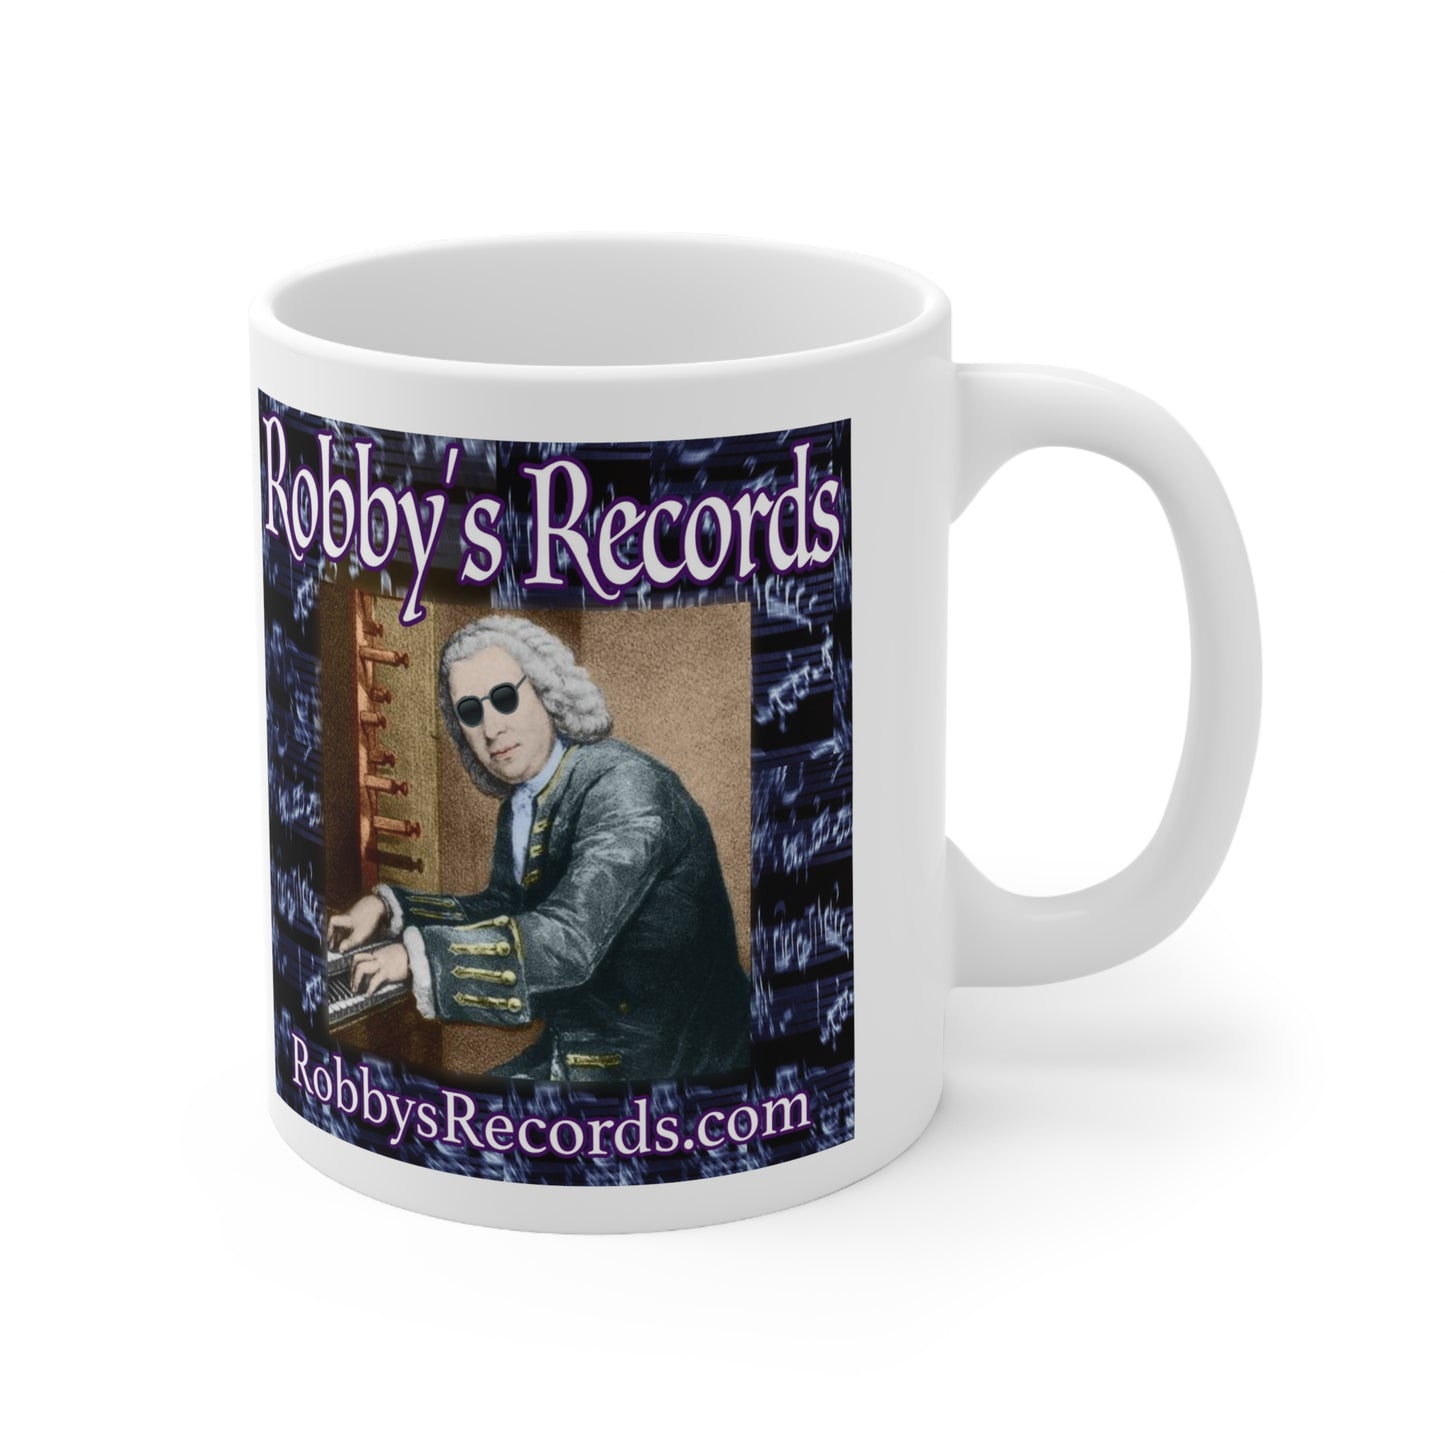 ROBBY'S RECORDS Ceramic Mug 11oz